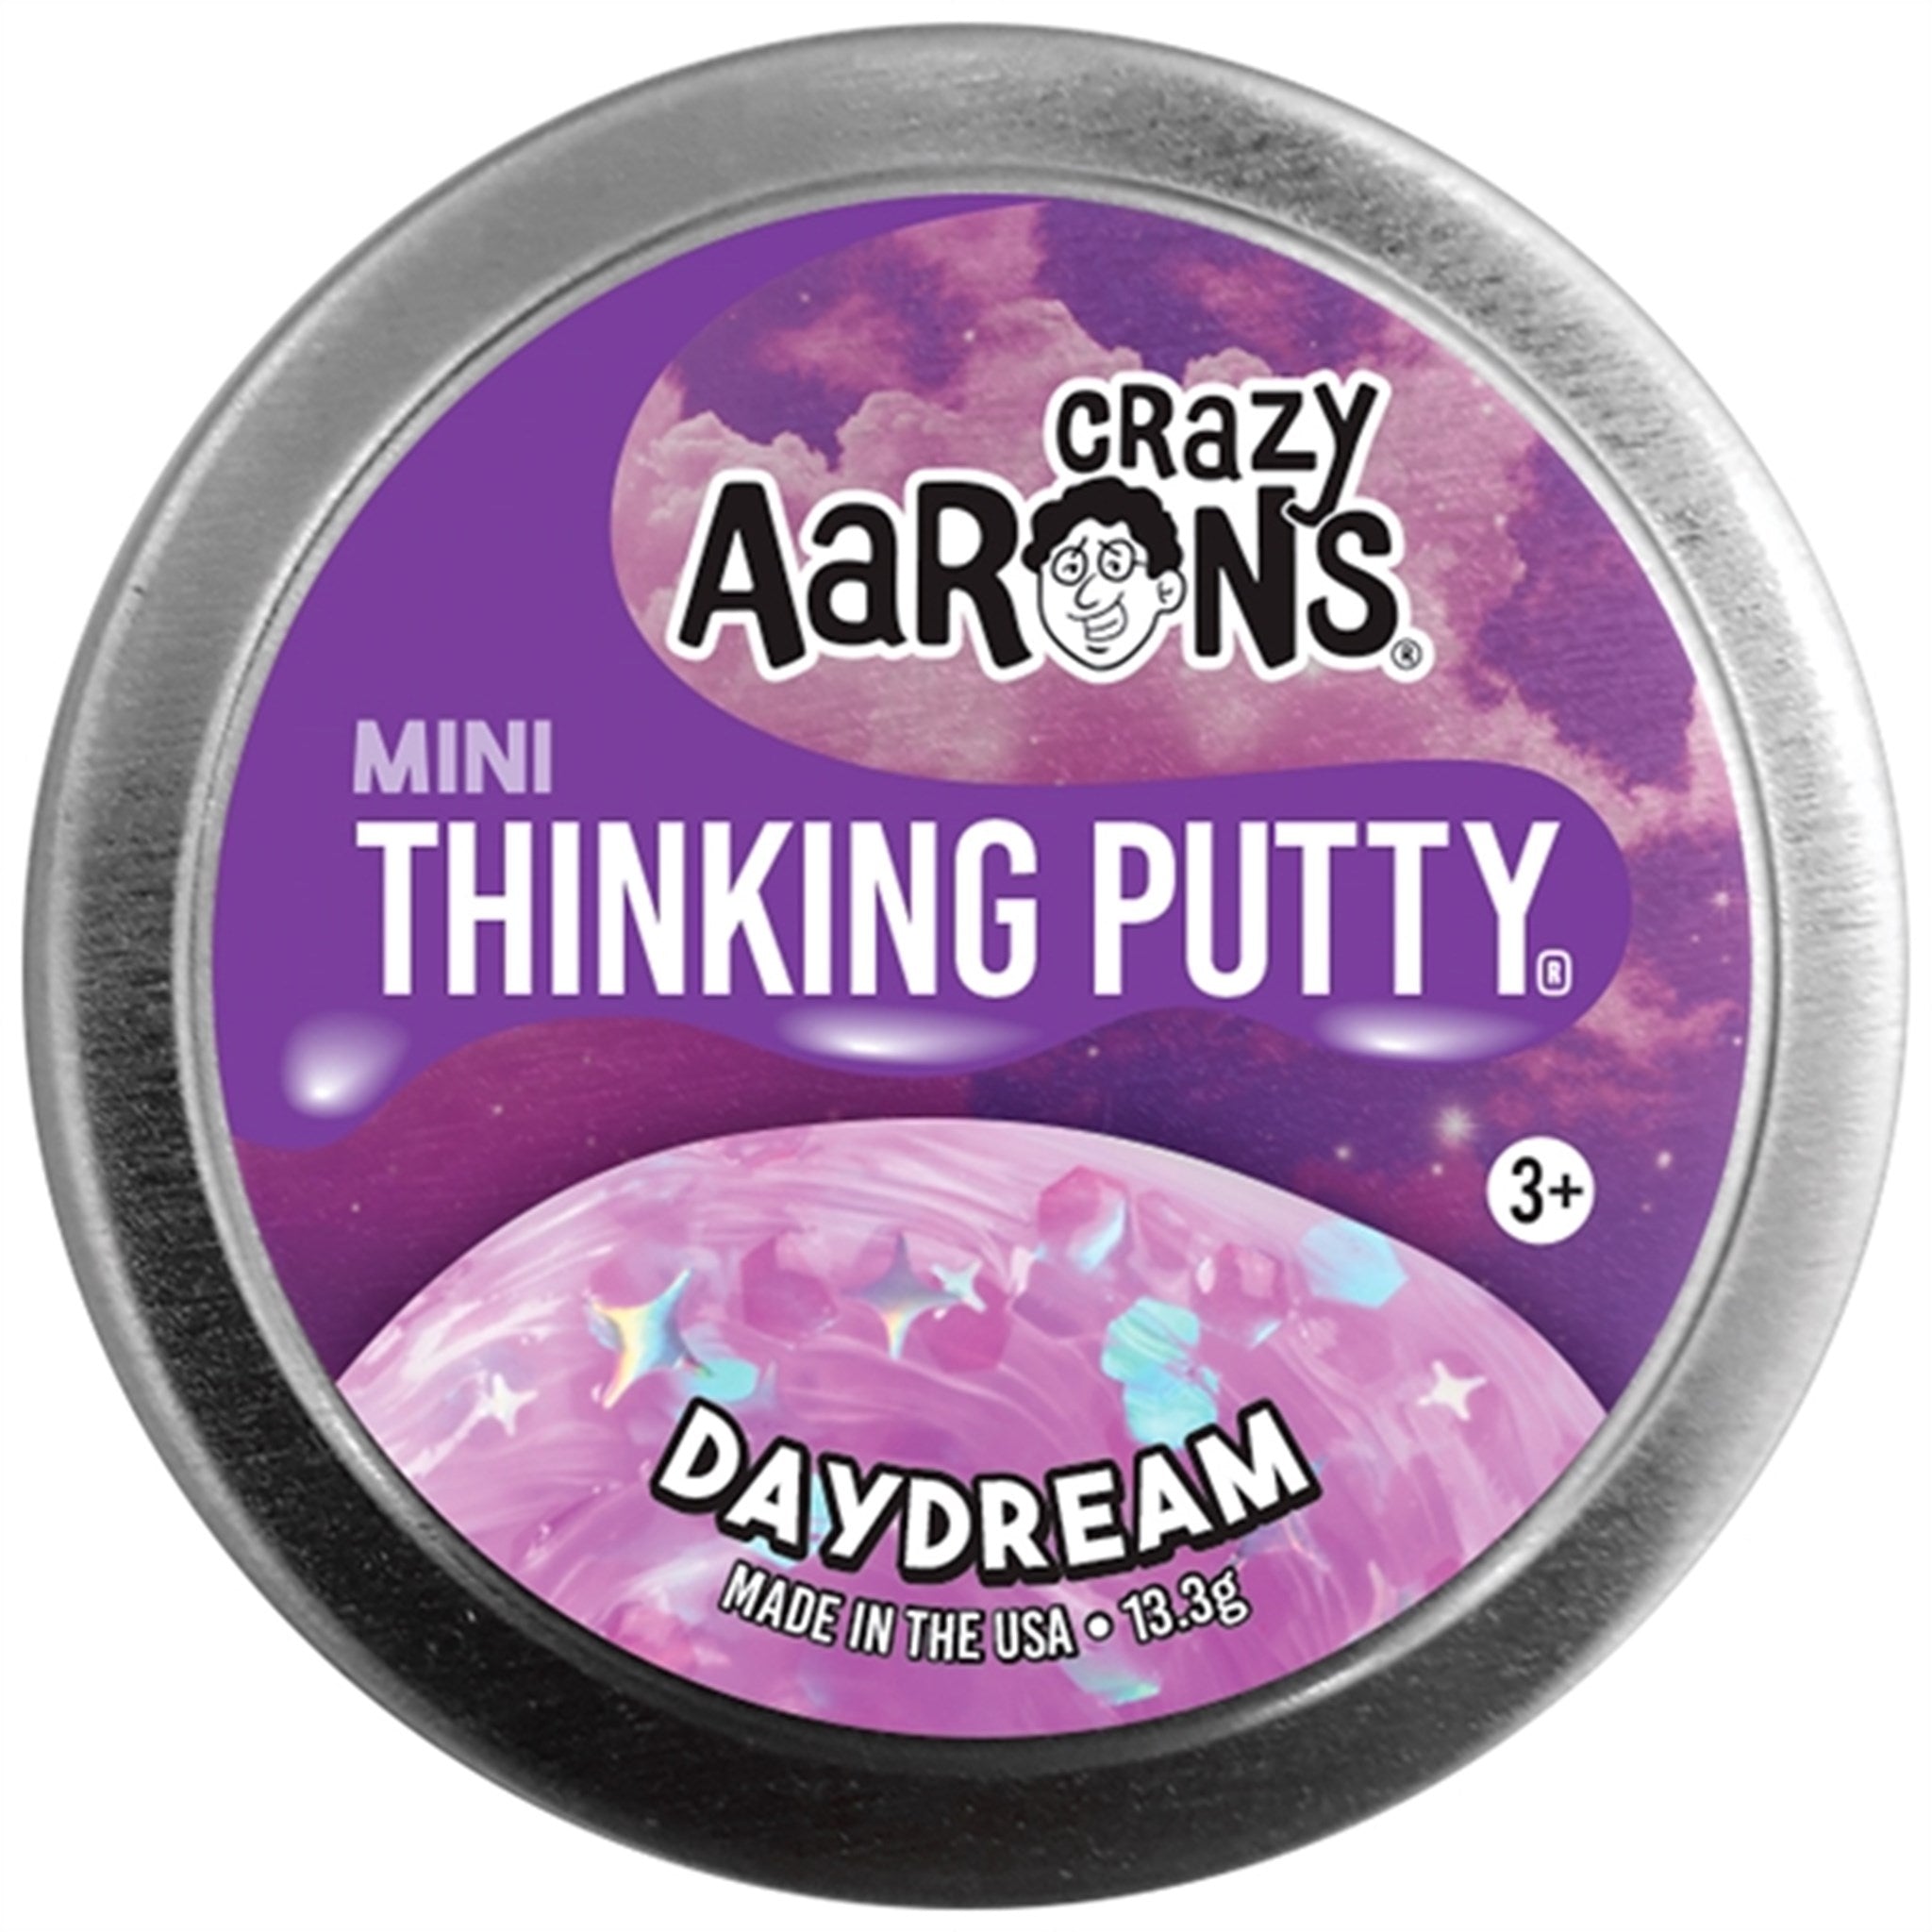 Crazy Aaron's® Thinking Putty Mini Tins - Daydream